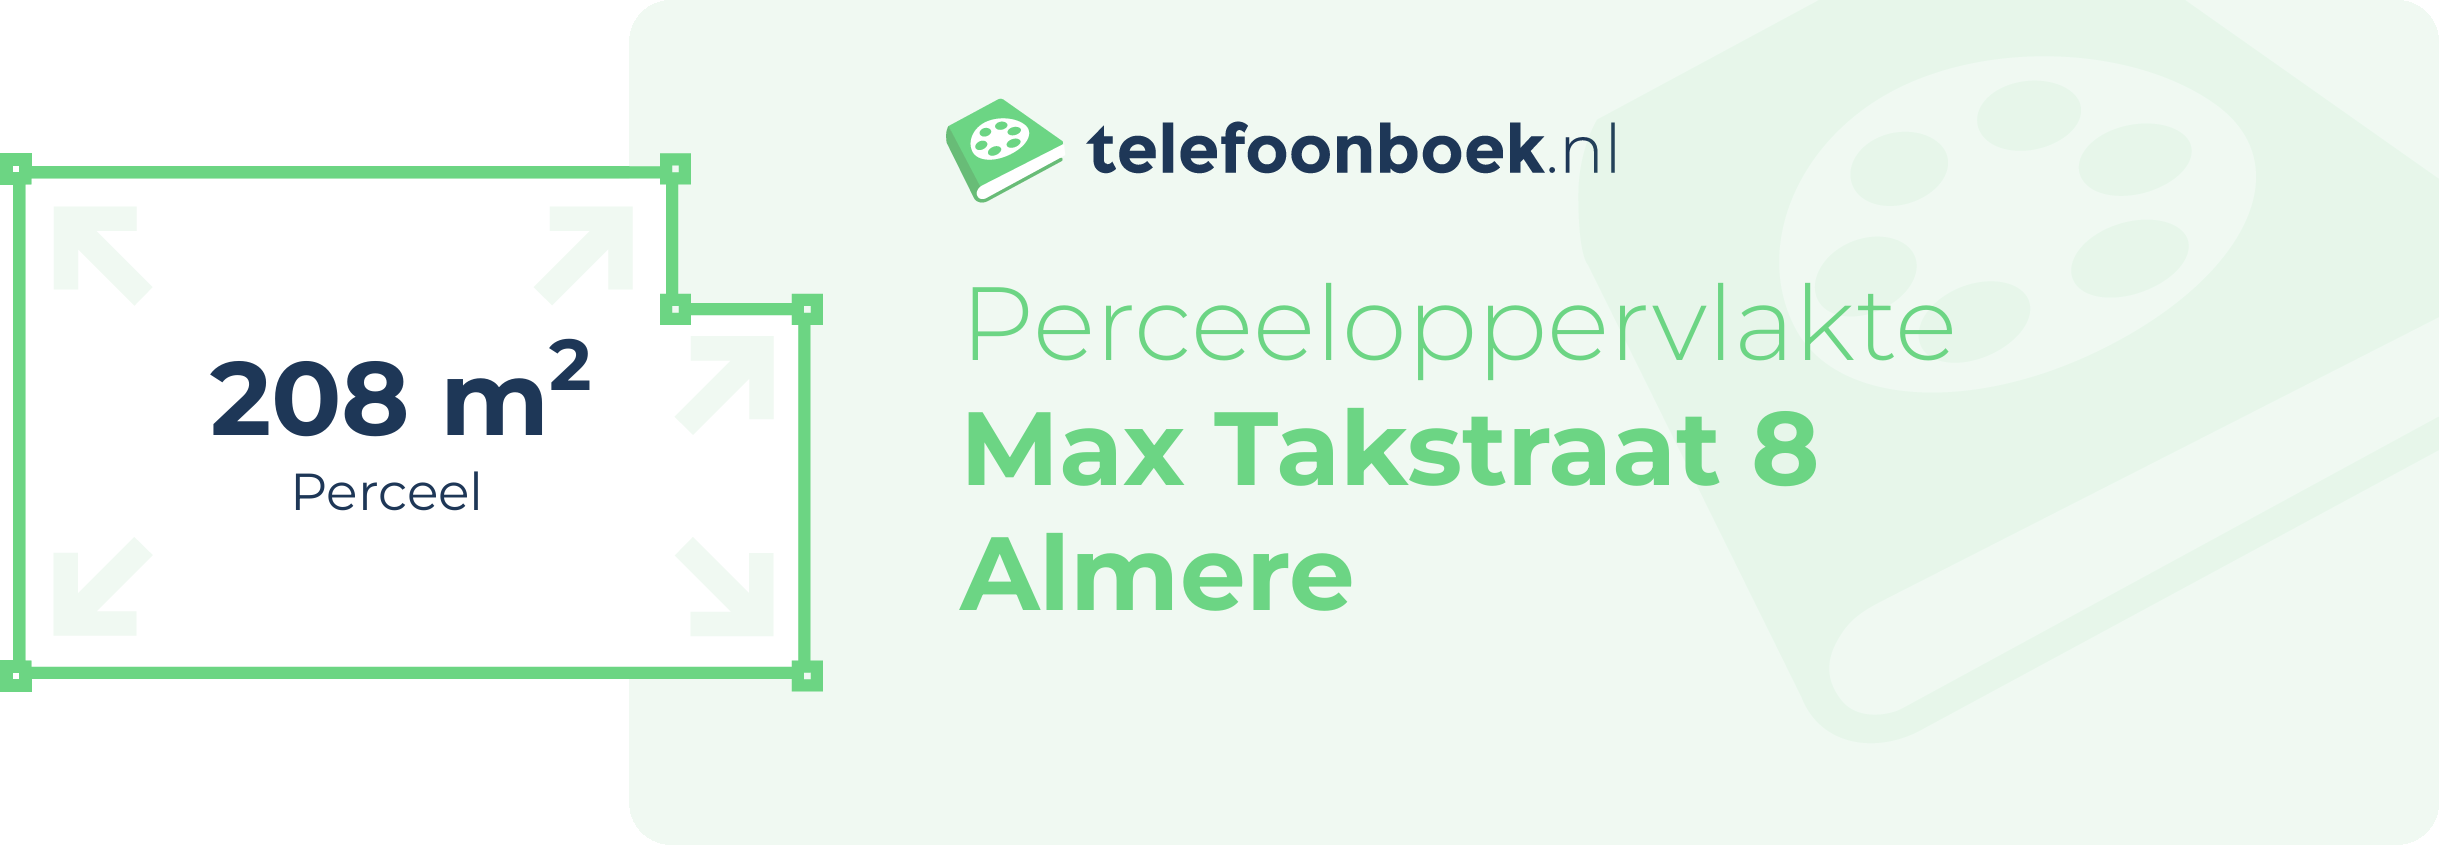 Perceeloppervlakte Max Takstraat 8 Almere